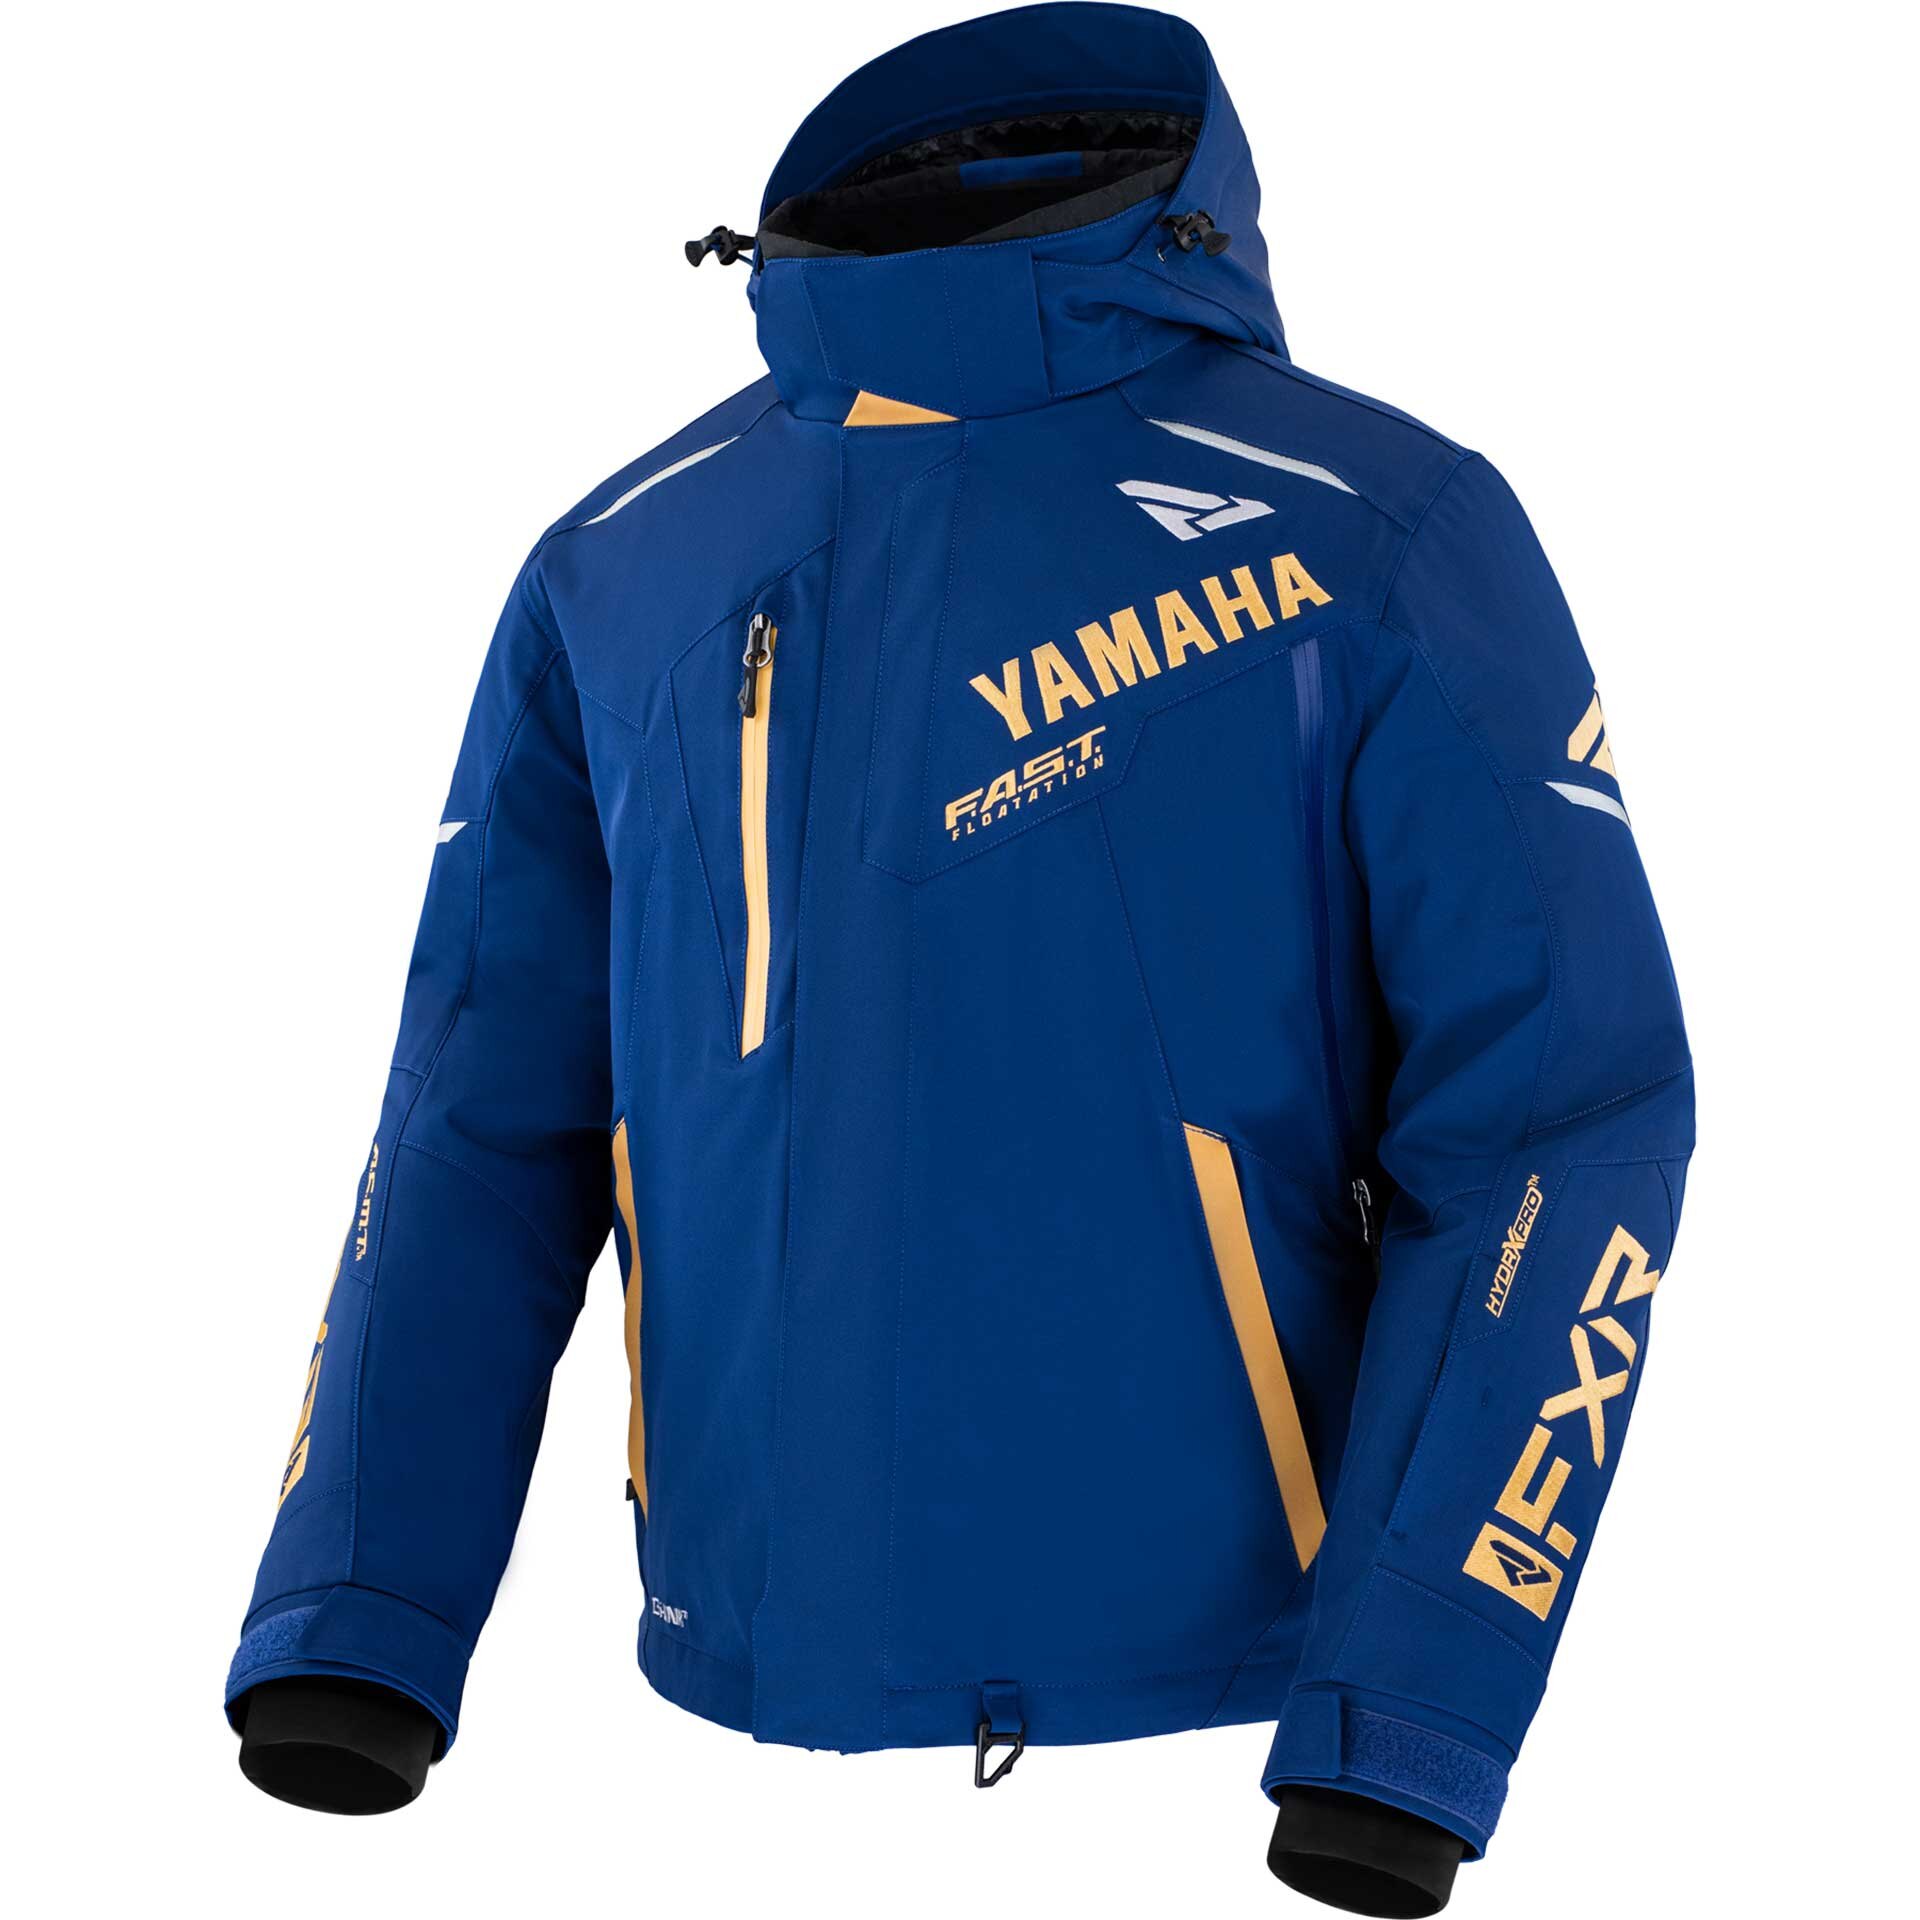 Yamaha Renegade FX Jacket by FXR® Medium navy blue/rust